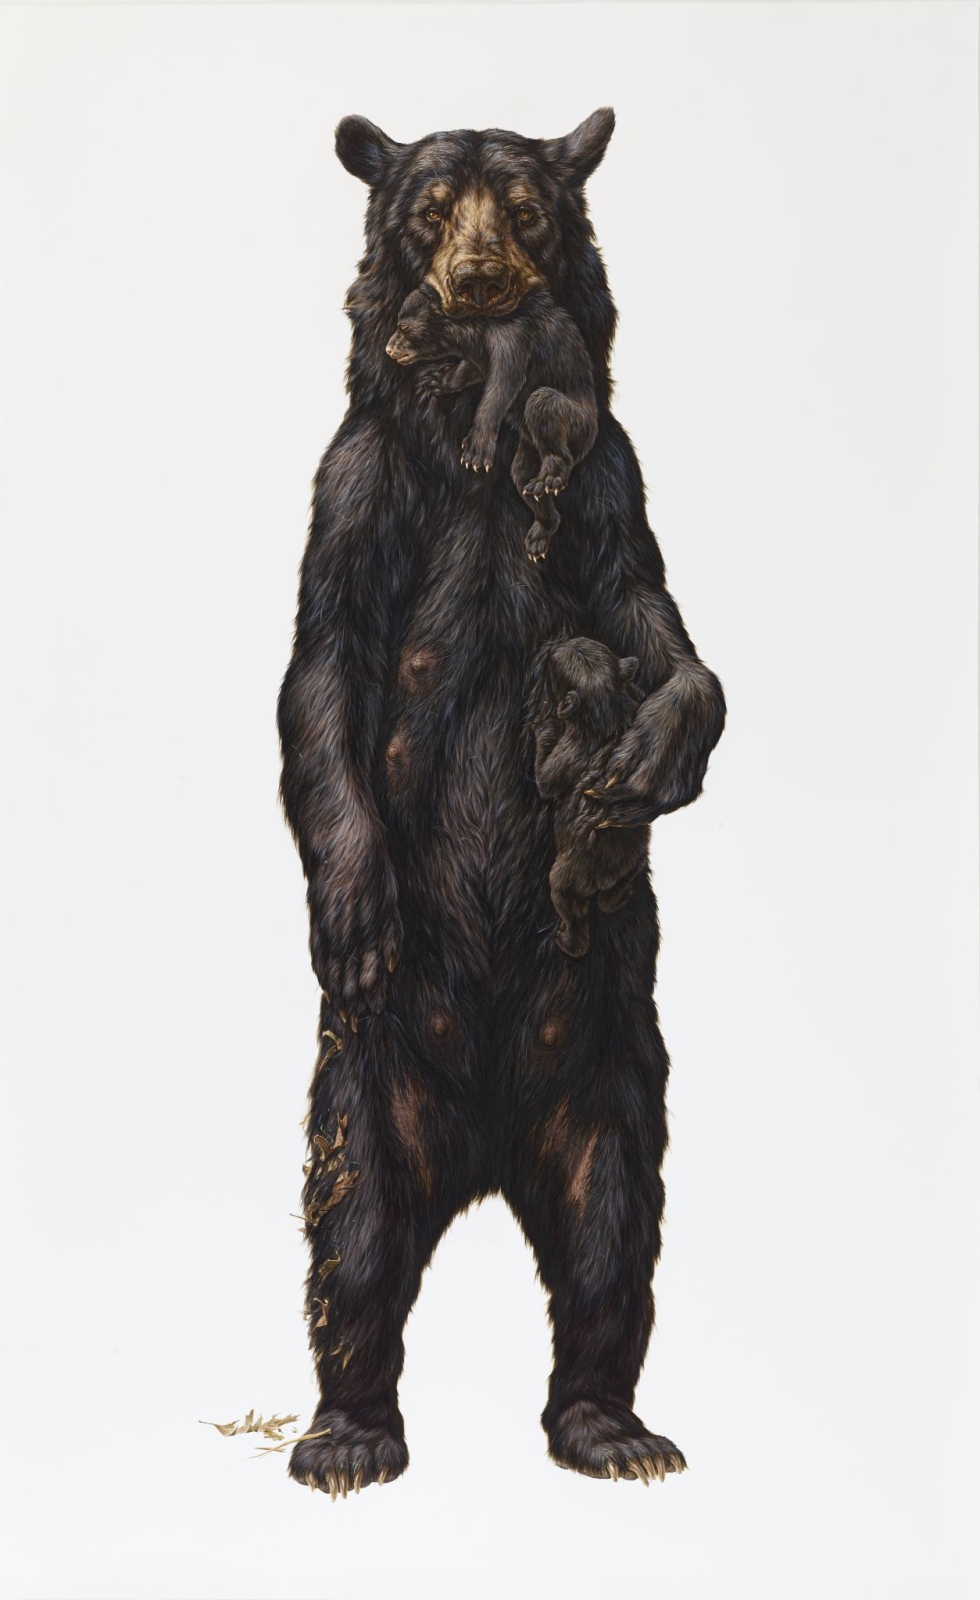 George Boorujy
Appalachian, 2014
ink on paper
84 1/4 x 53 3/4 in.
214 x 136.53 cm